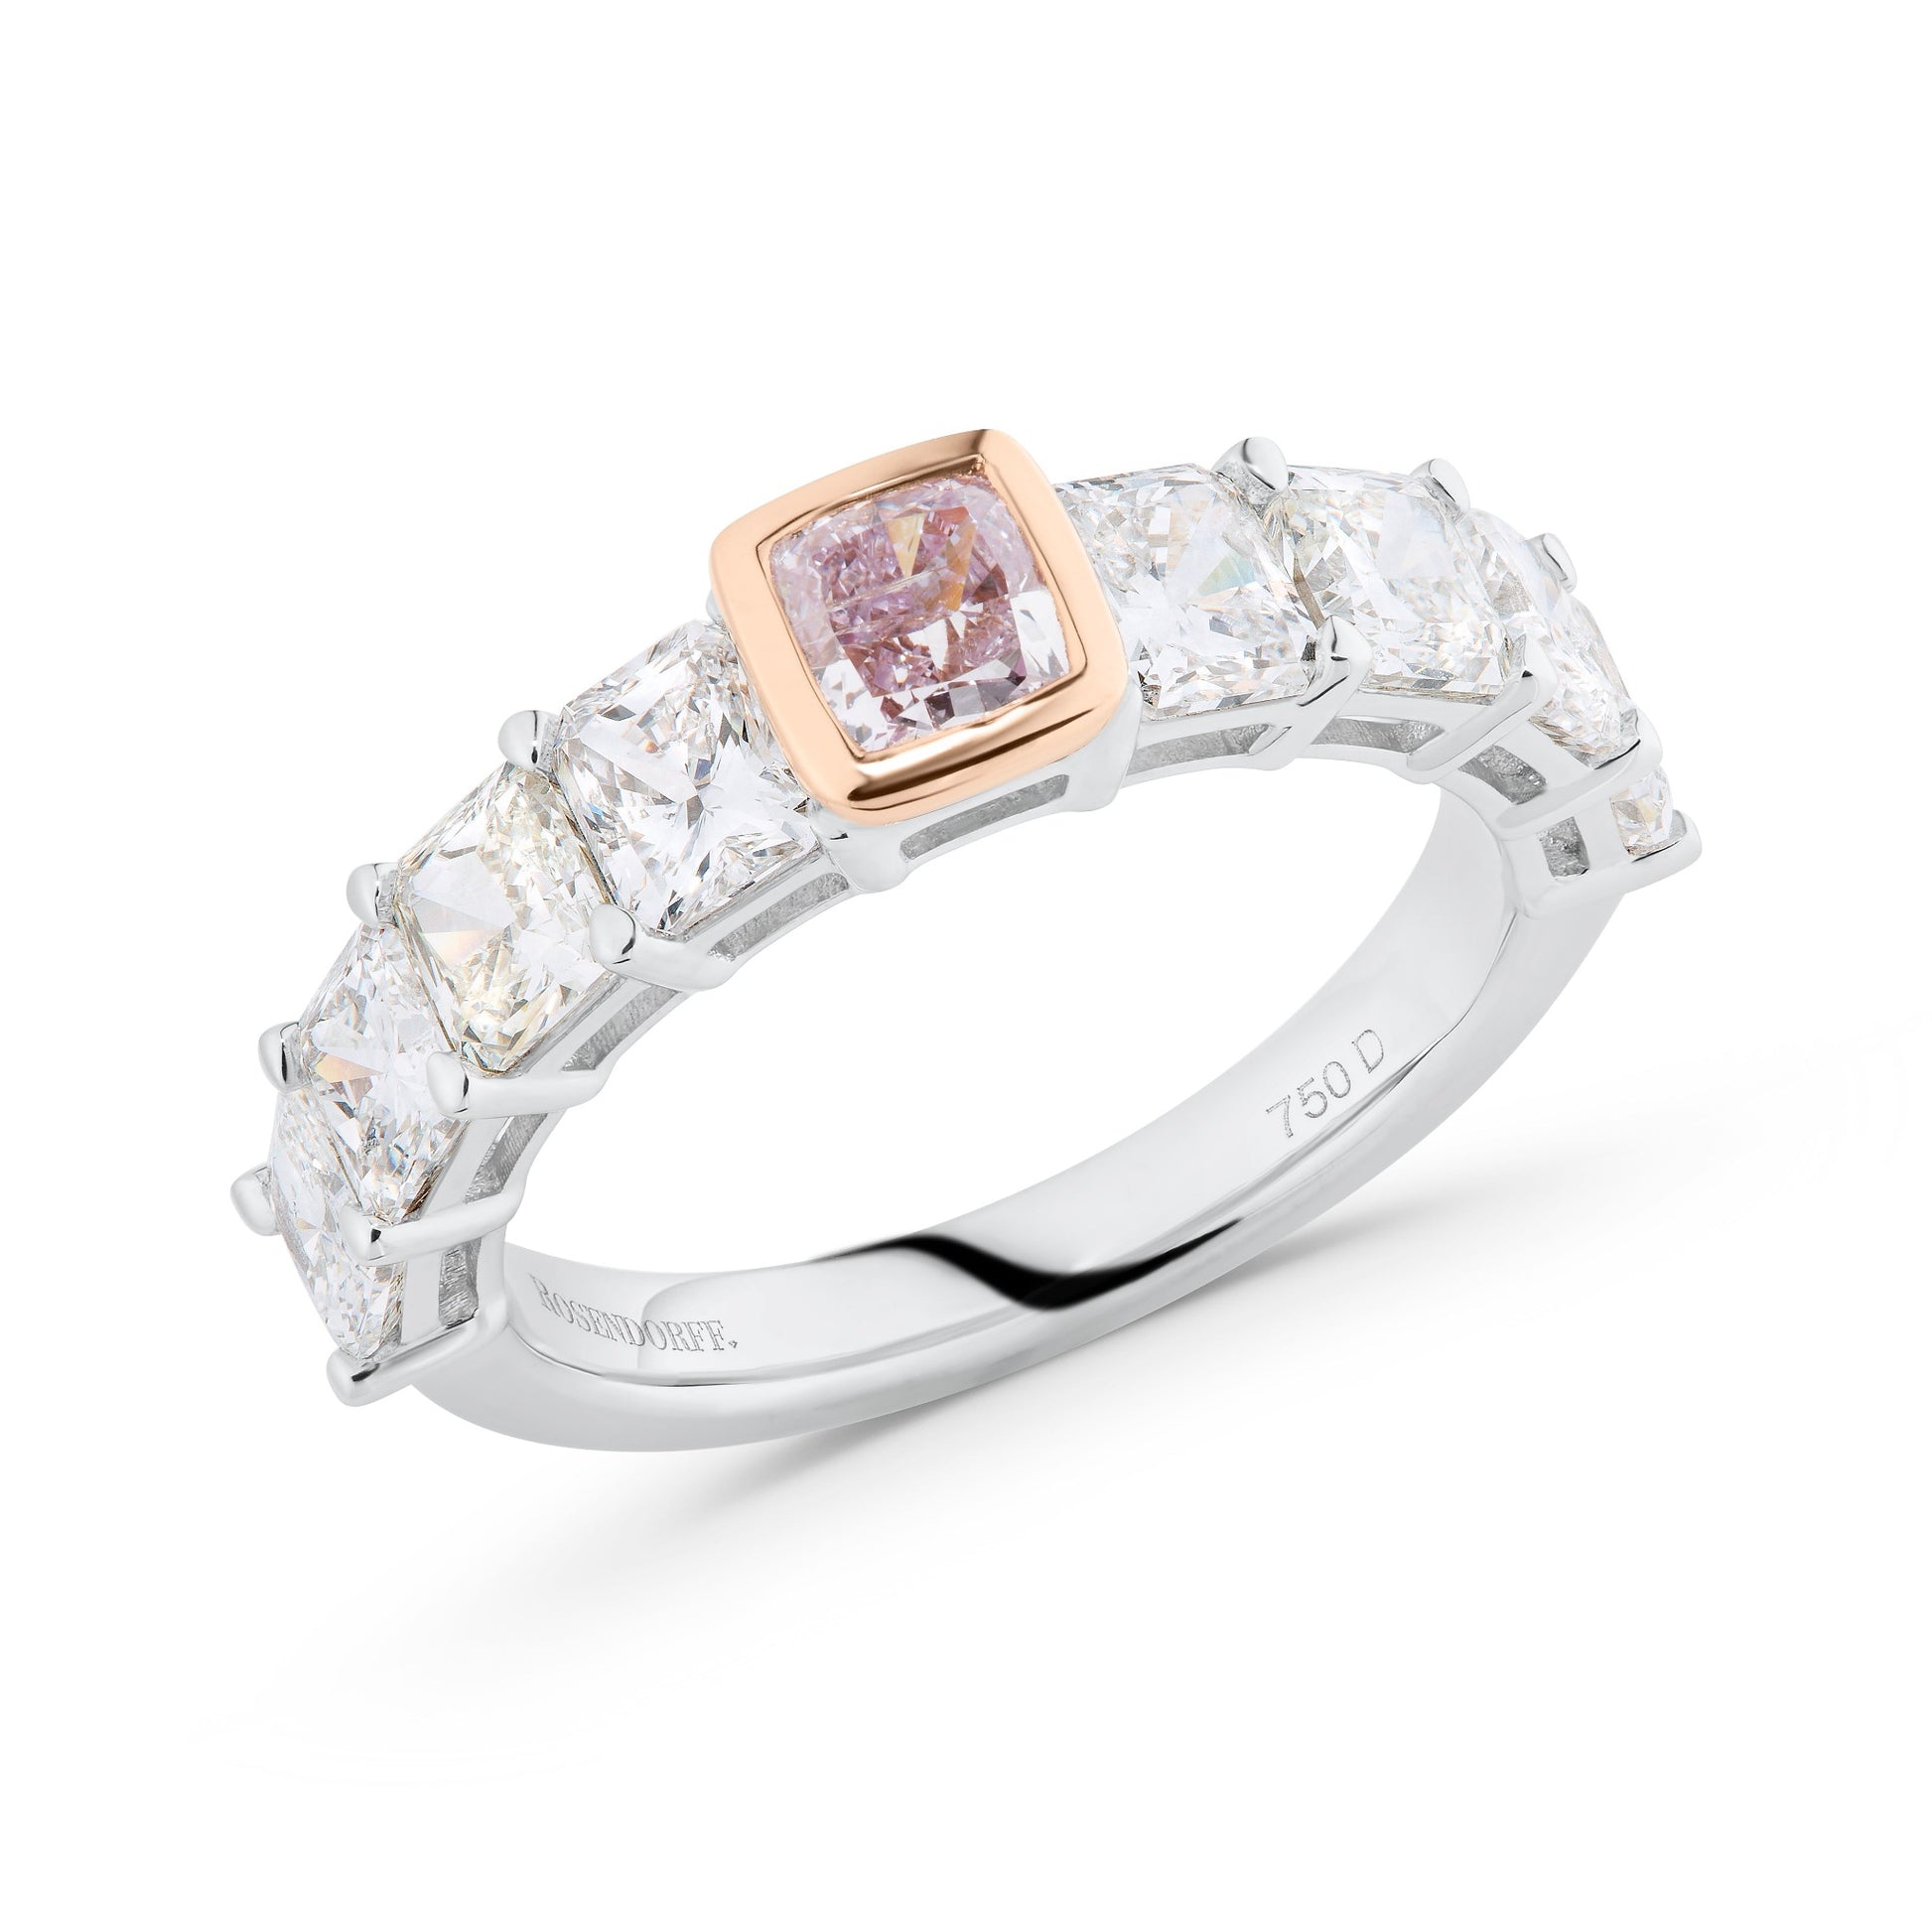 Cushion Pink Purple Diamond Ring